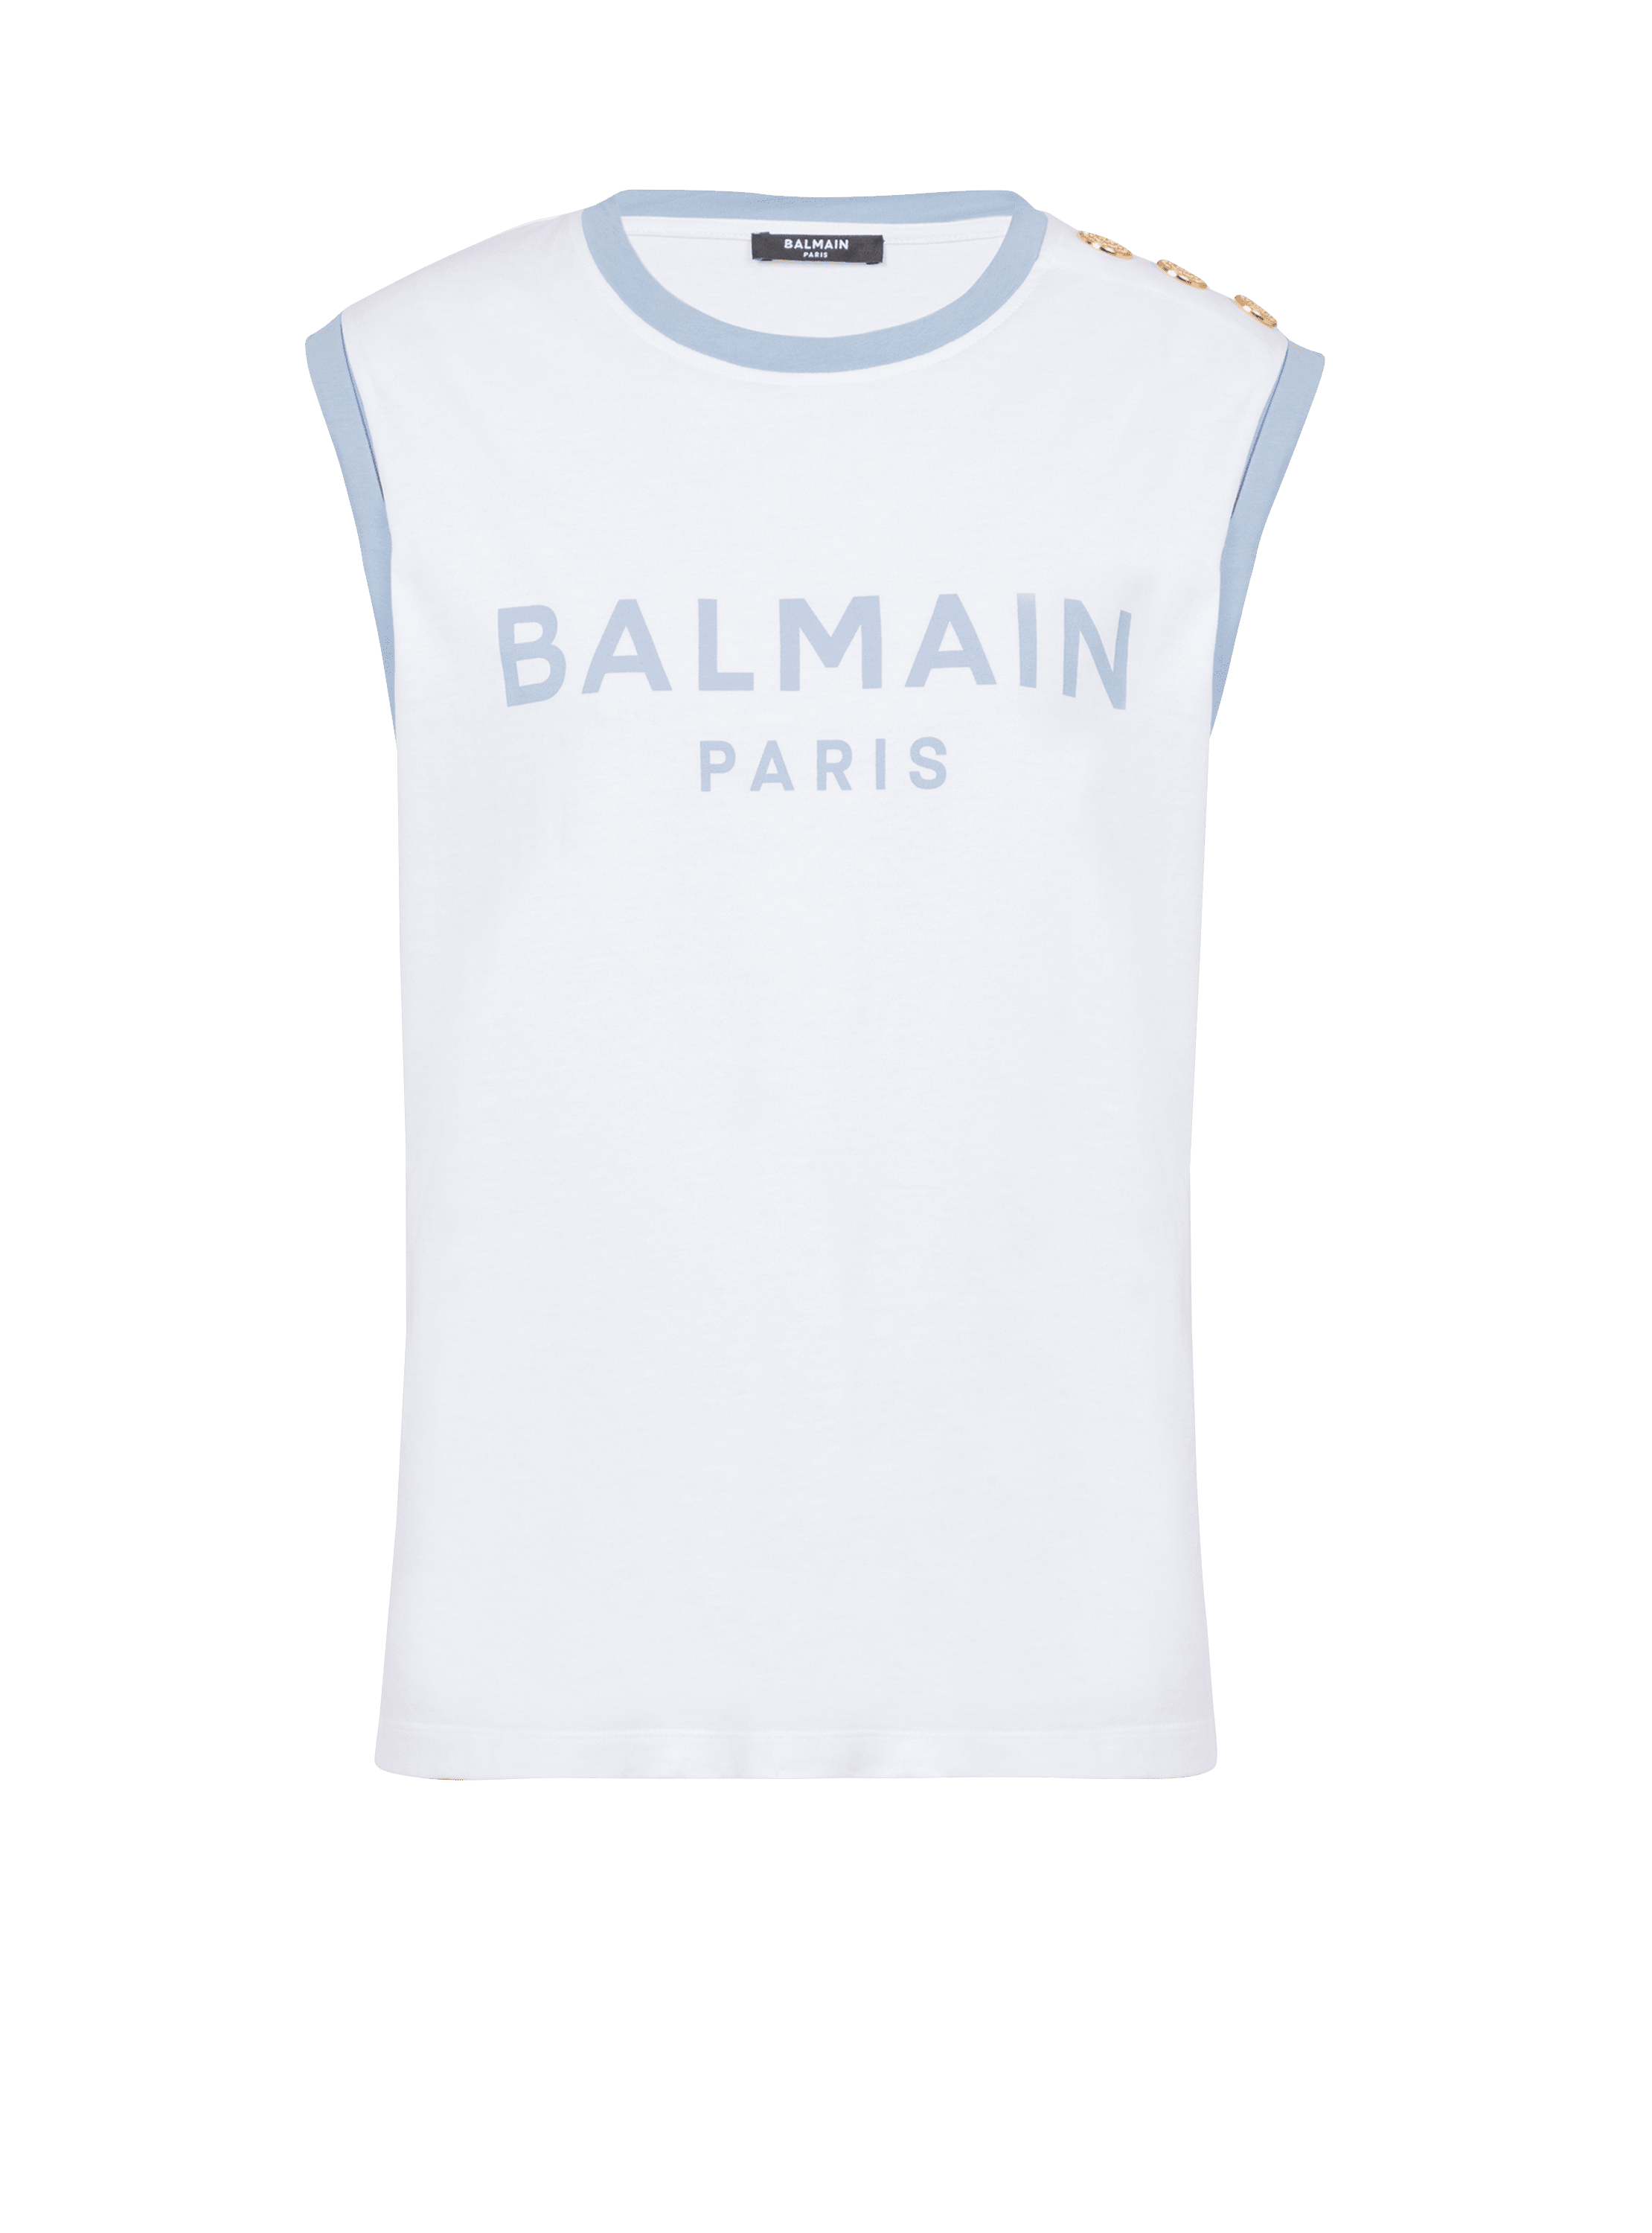 Camiseta sin mangas con 3 botones Balmain Paris